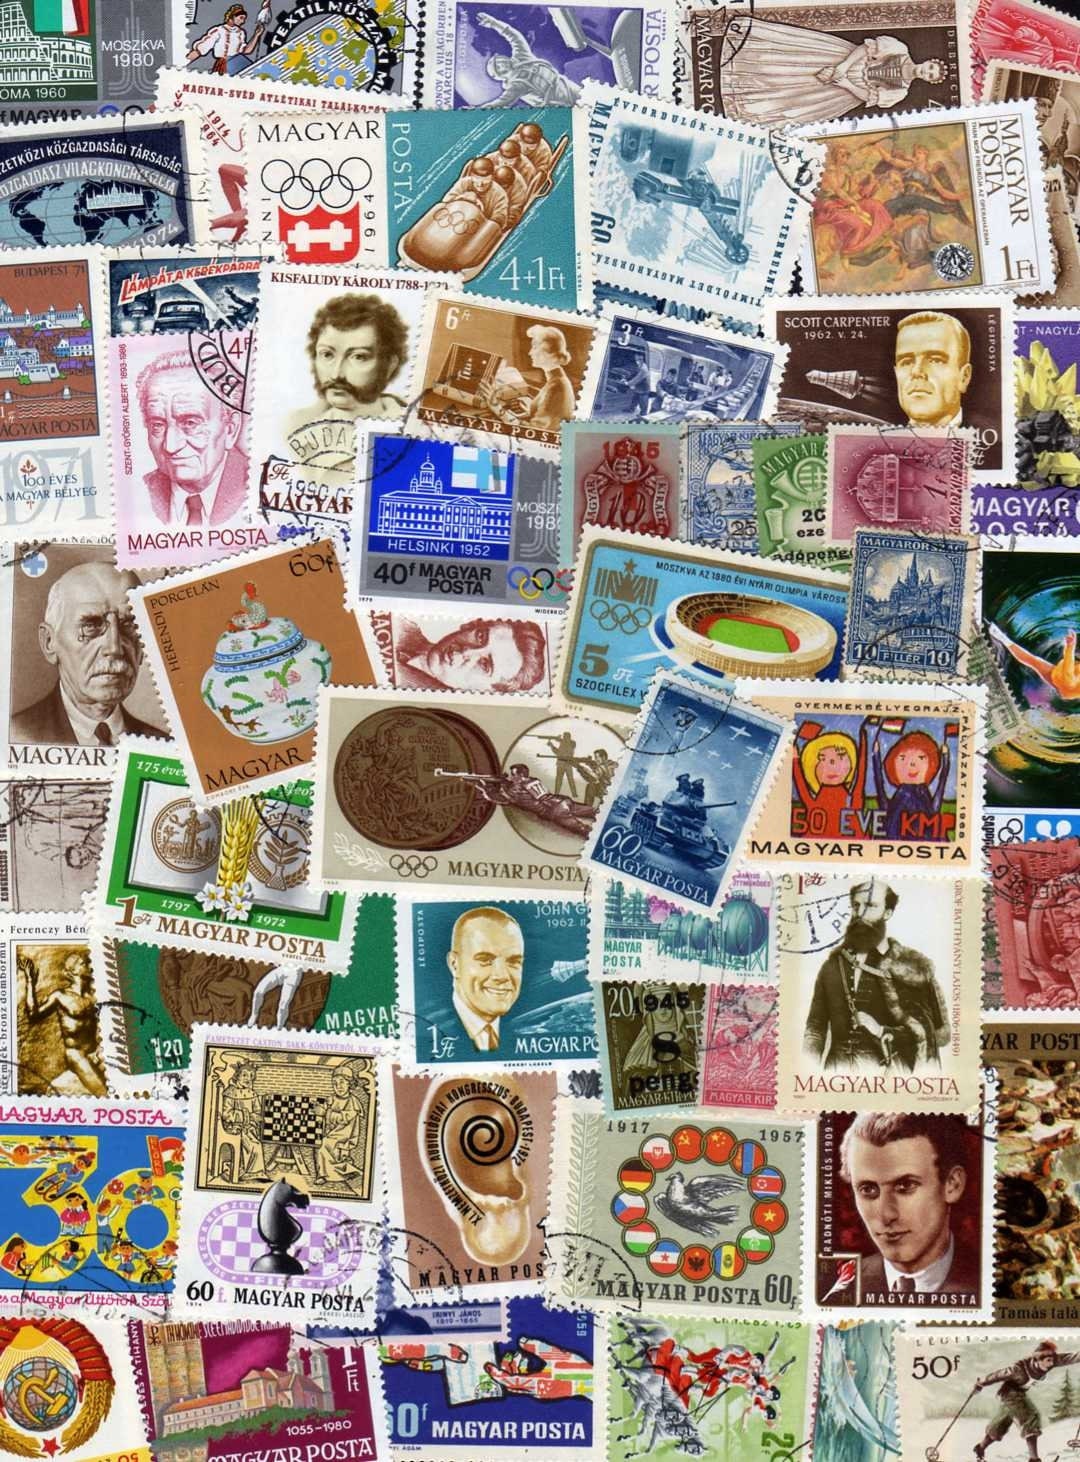 OLD 13 used postal stamps, MAGYAR KIR POSTA Hungary, 1900s HIVATALOS FILLER